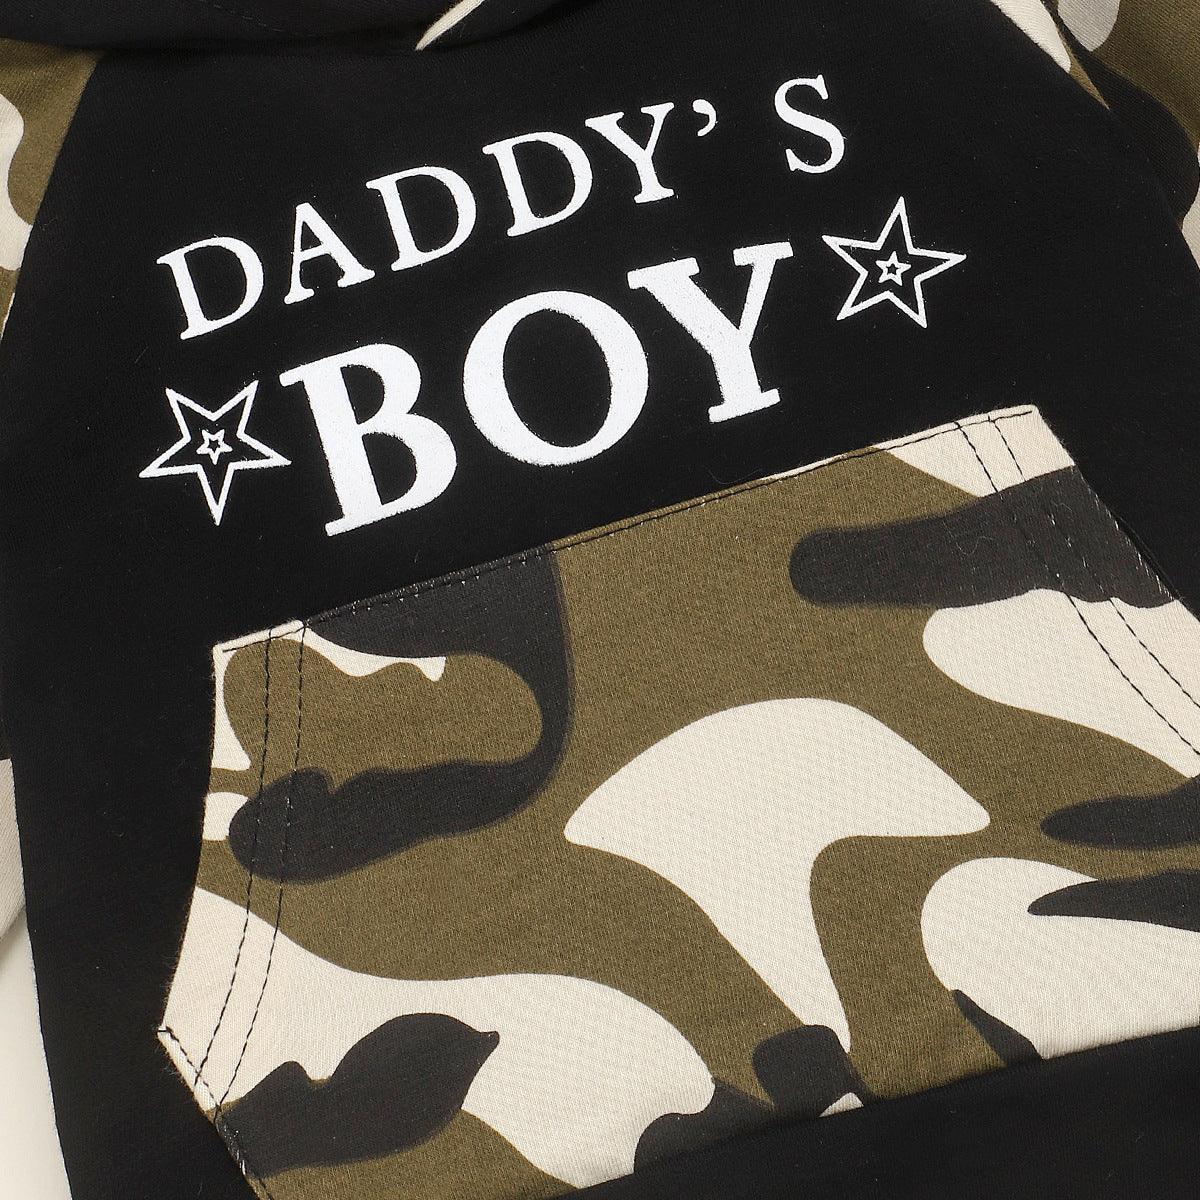 Stylish Boys' Sports Suit - Daddy's Boy | TrendyAffordables - TrendyAffordables - 0